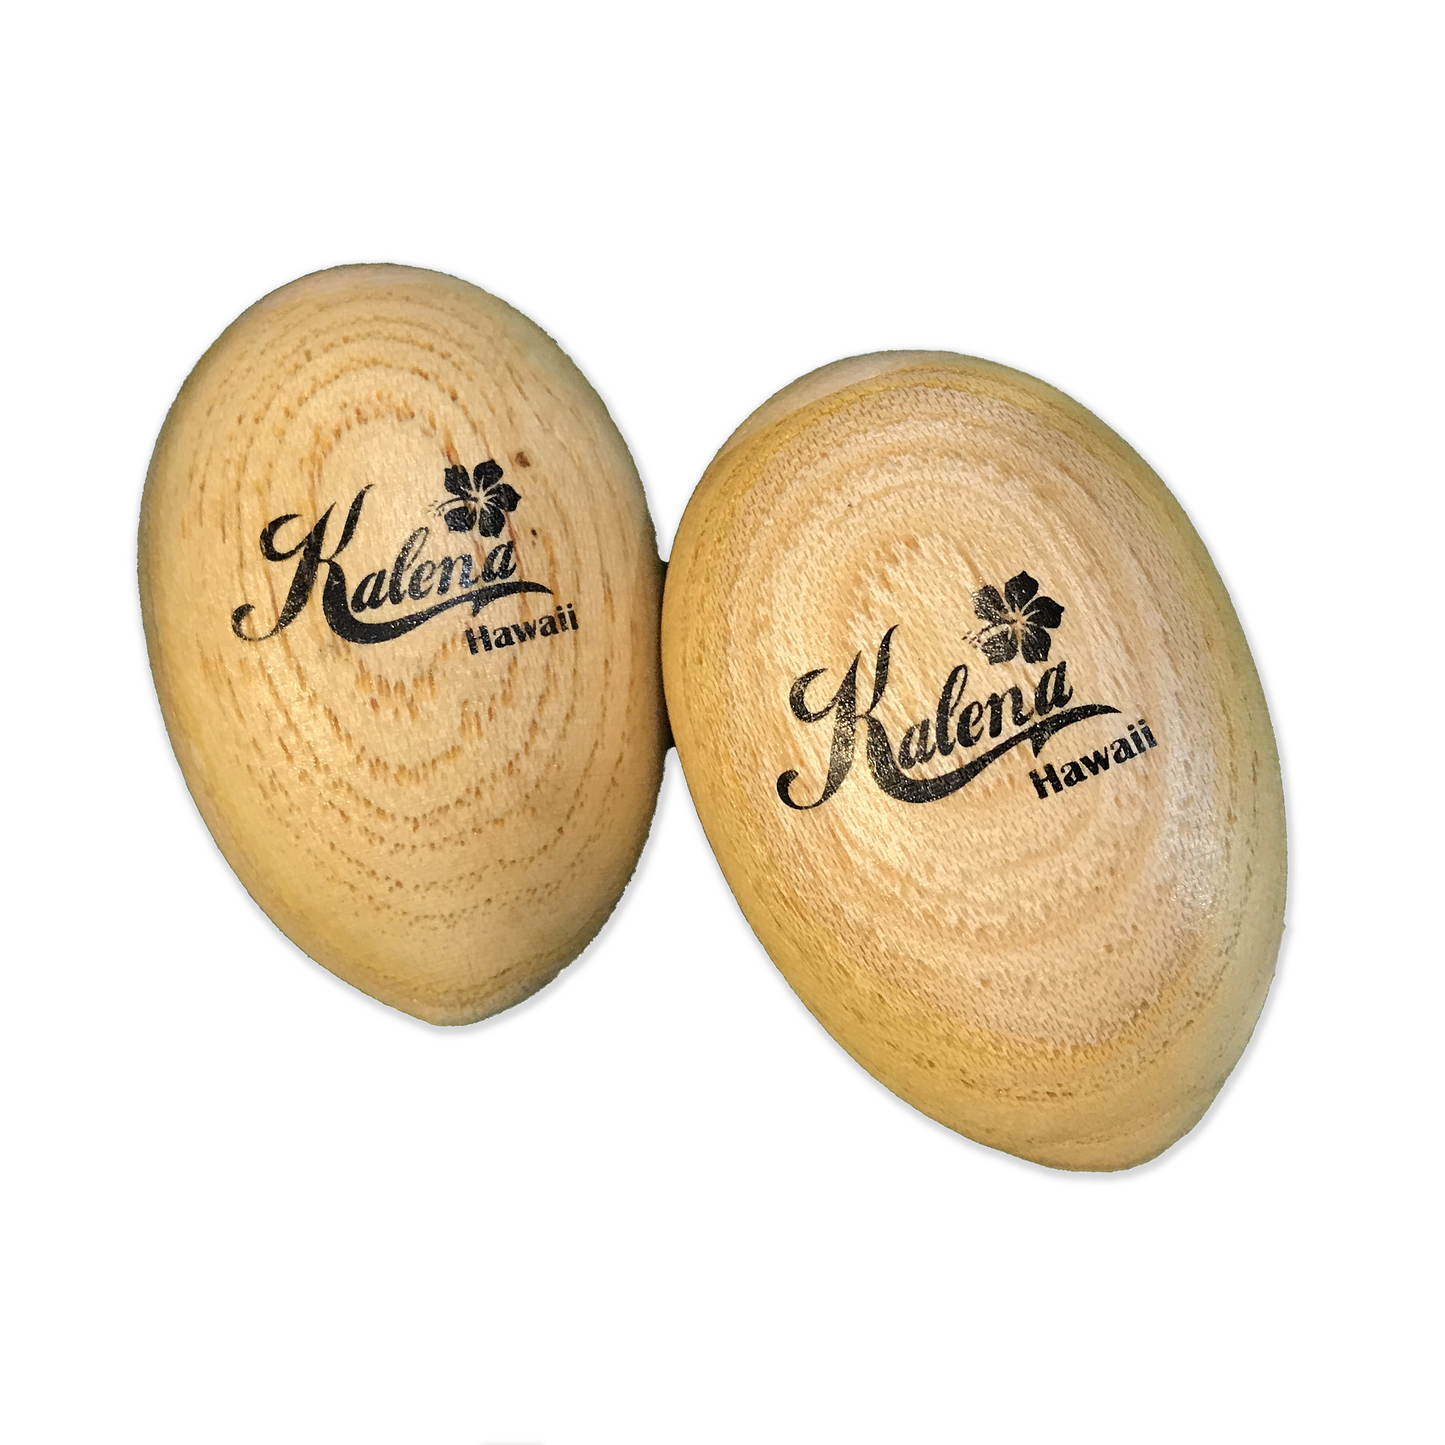 Kalena Wooden Egg Shaker Natural Finish Percussion Instrument 2pk